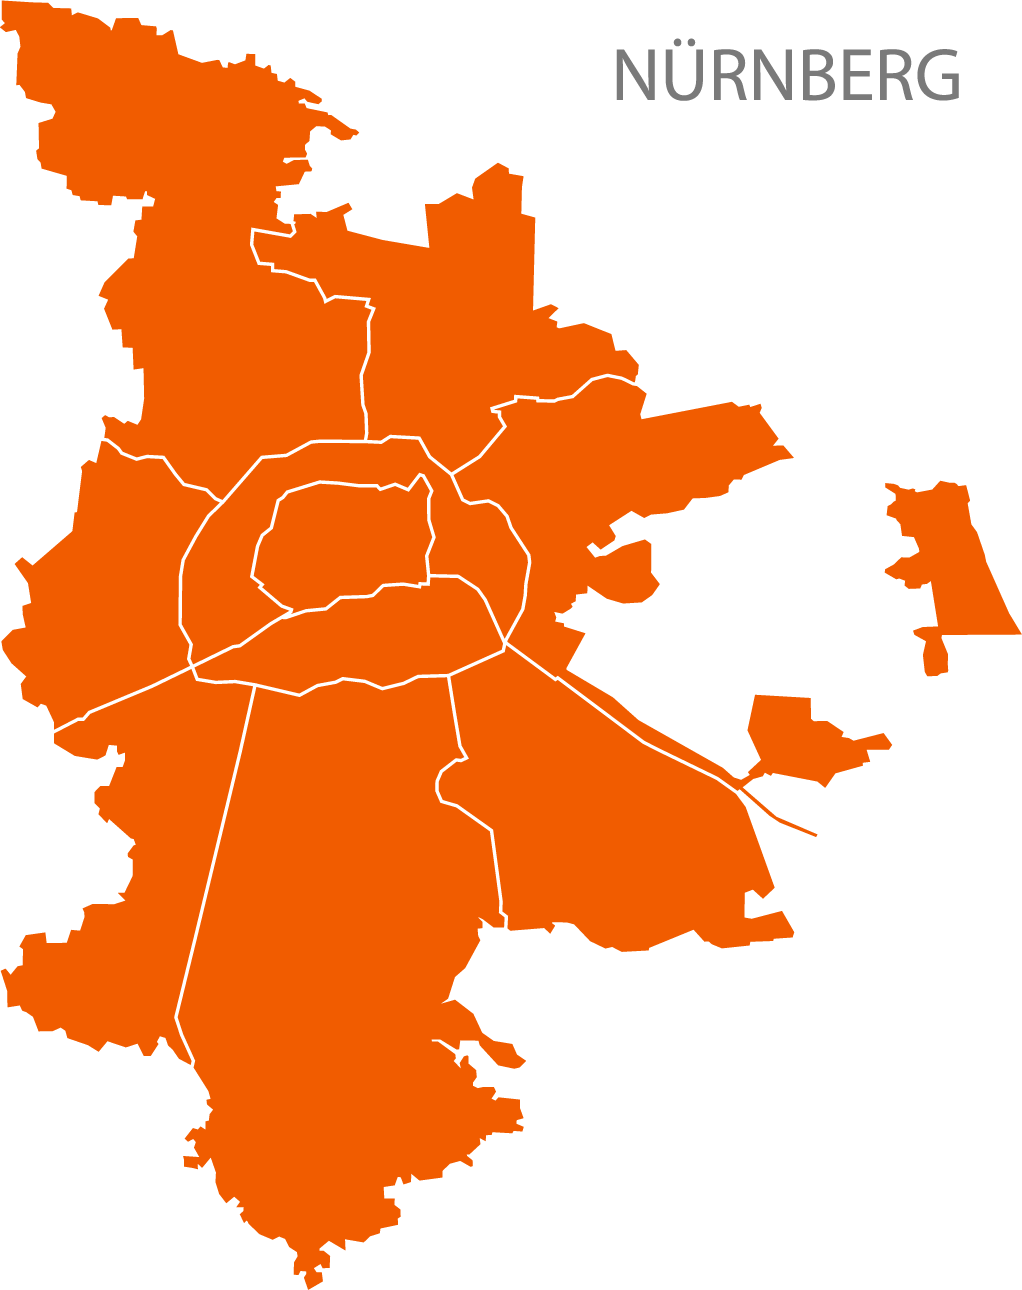 logistikdienstleister-standort-nürnberg-stadtteil-karte